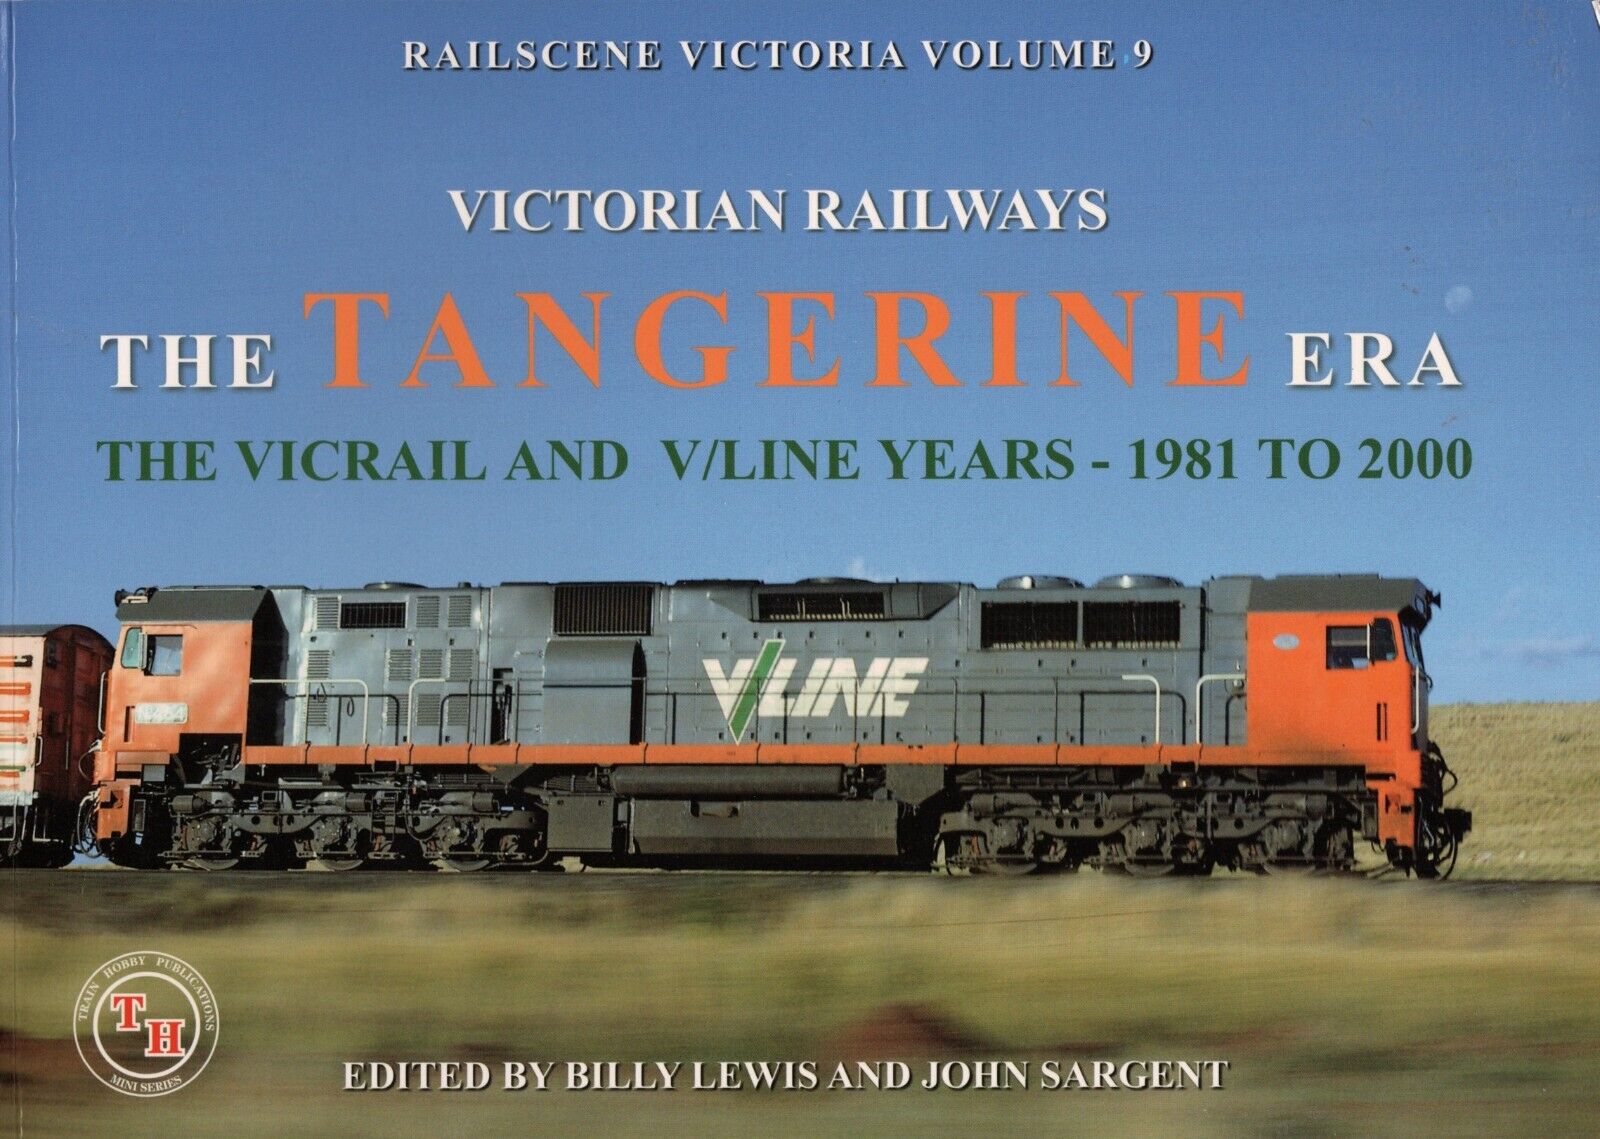 Rail Scene Victoria Volume 9 - Victorian Railways - The Tangerine Era